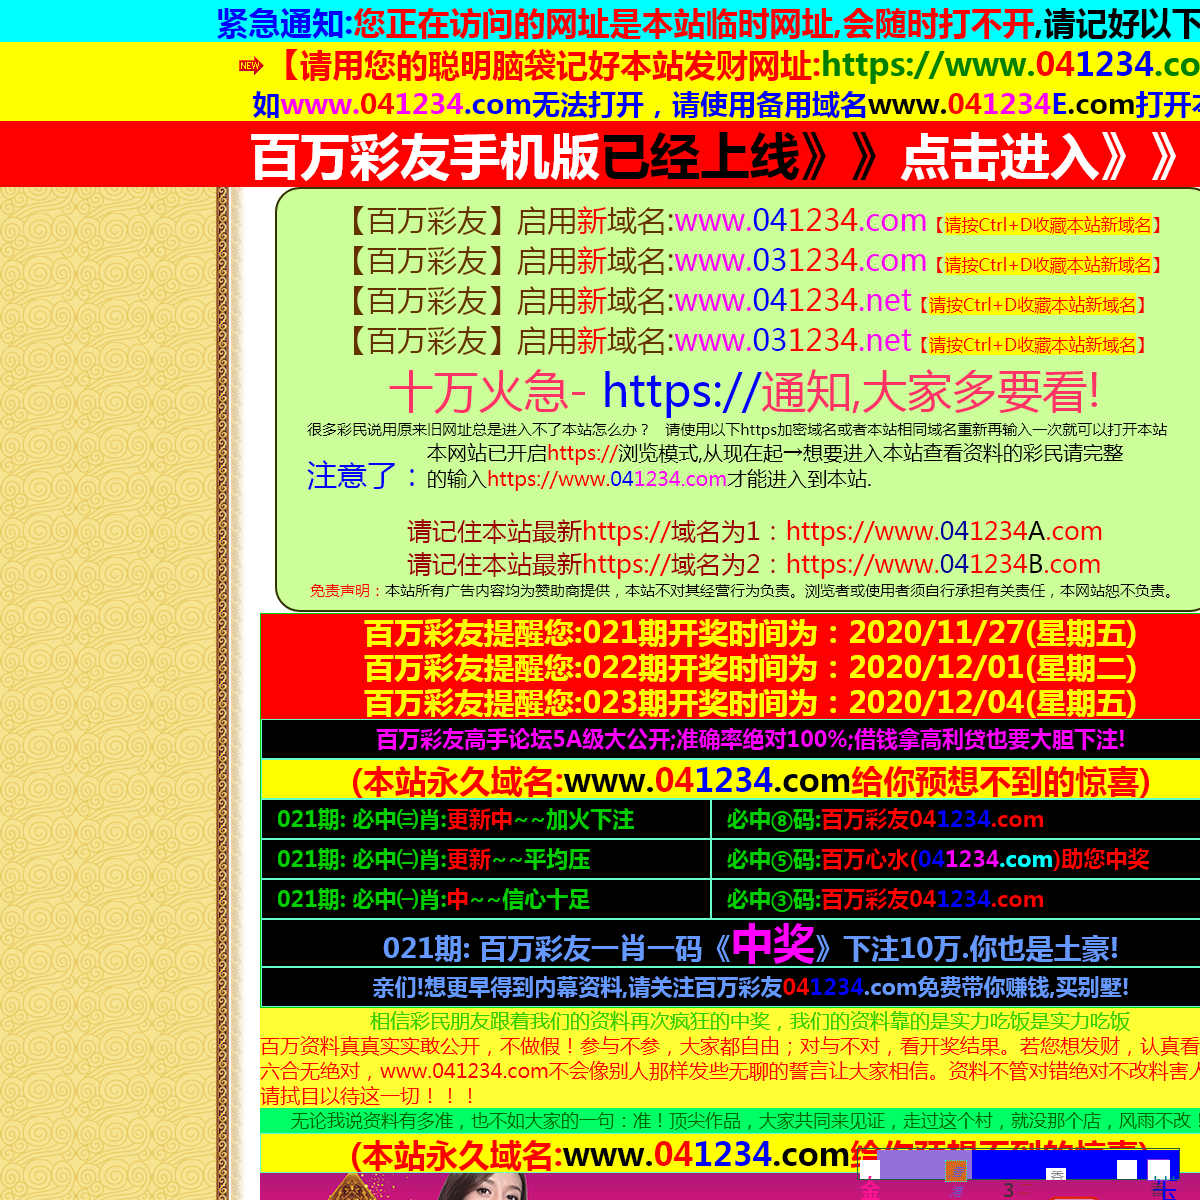 A complete backup of www-hk385.com